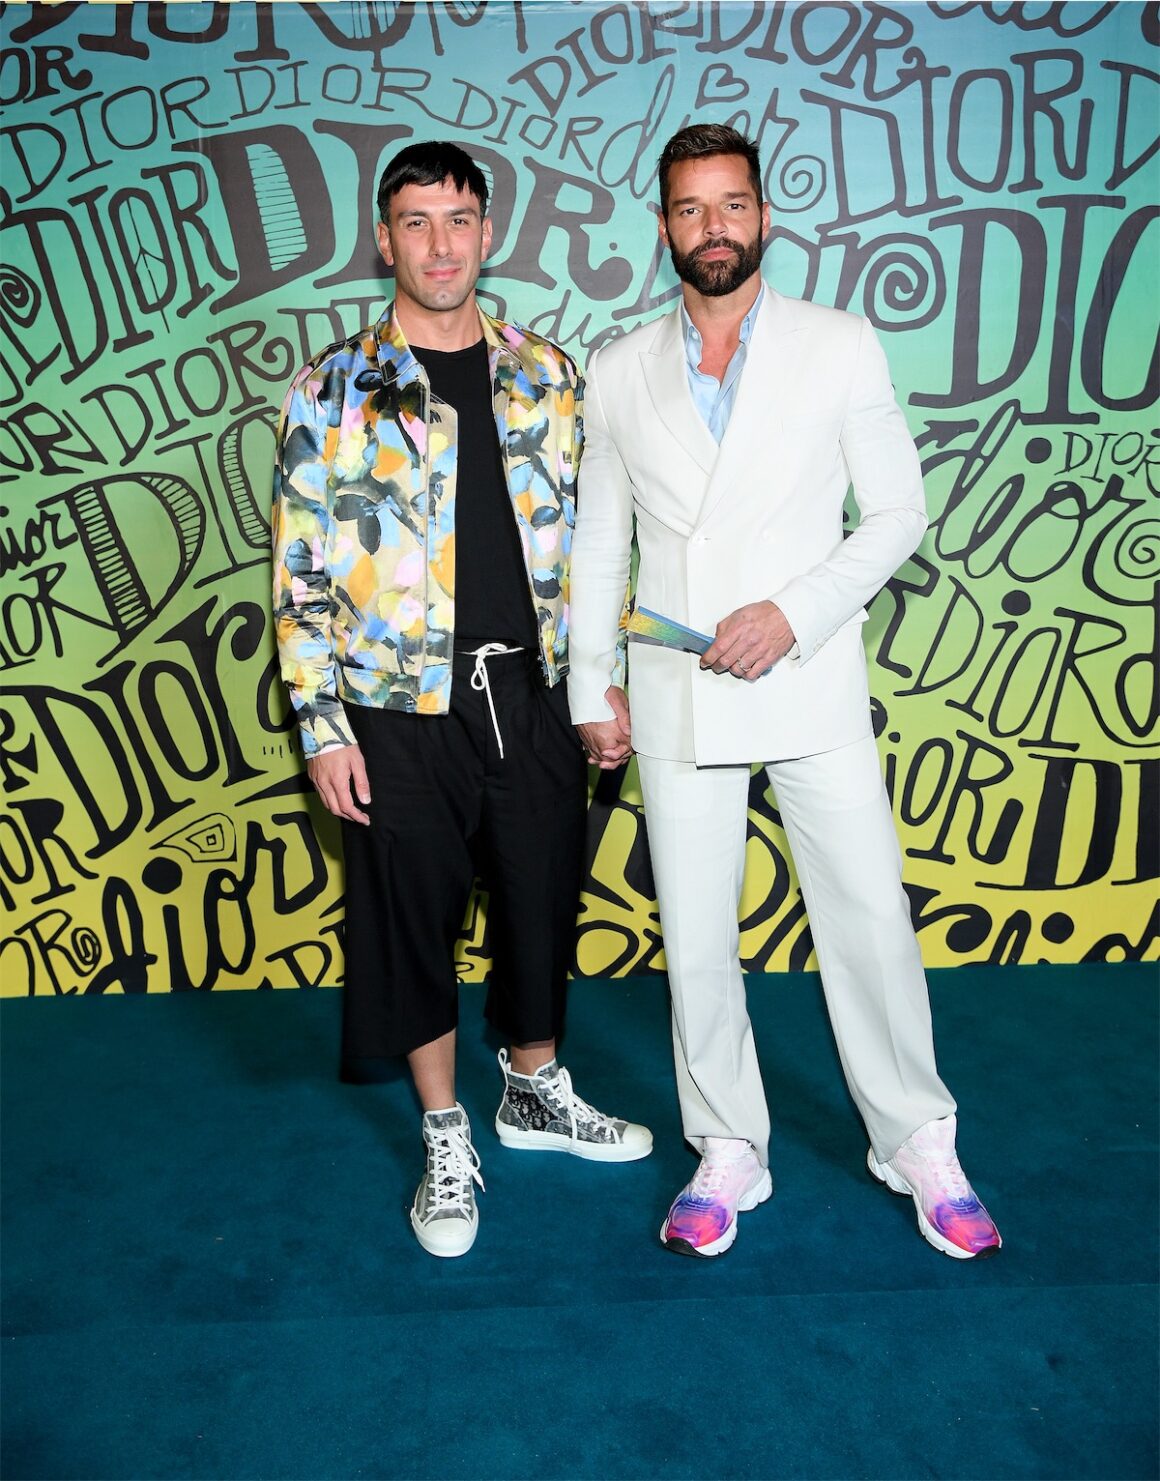 Jwan Yosef and Ricky Martin Dior Men Fall 2020 Runway Show